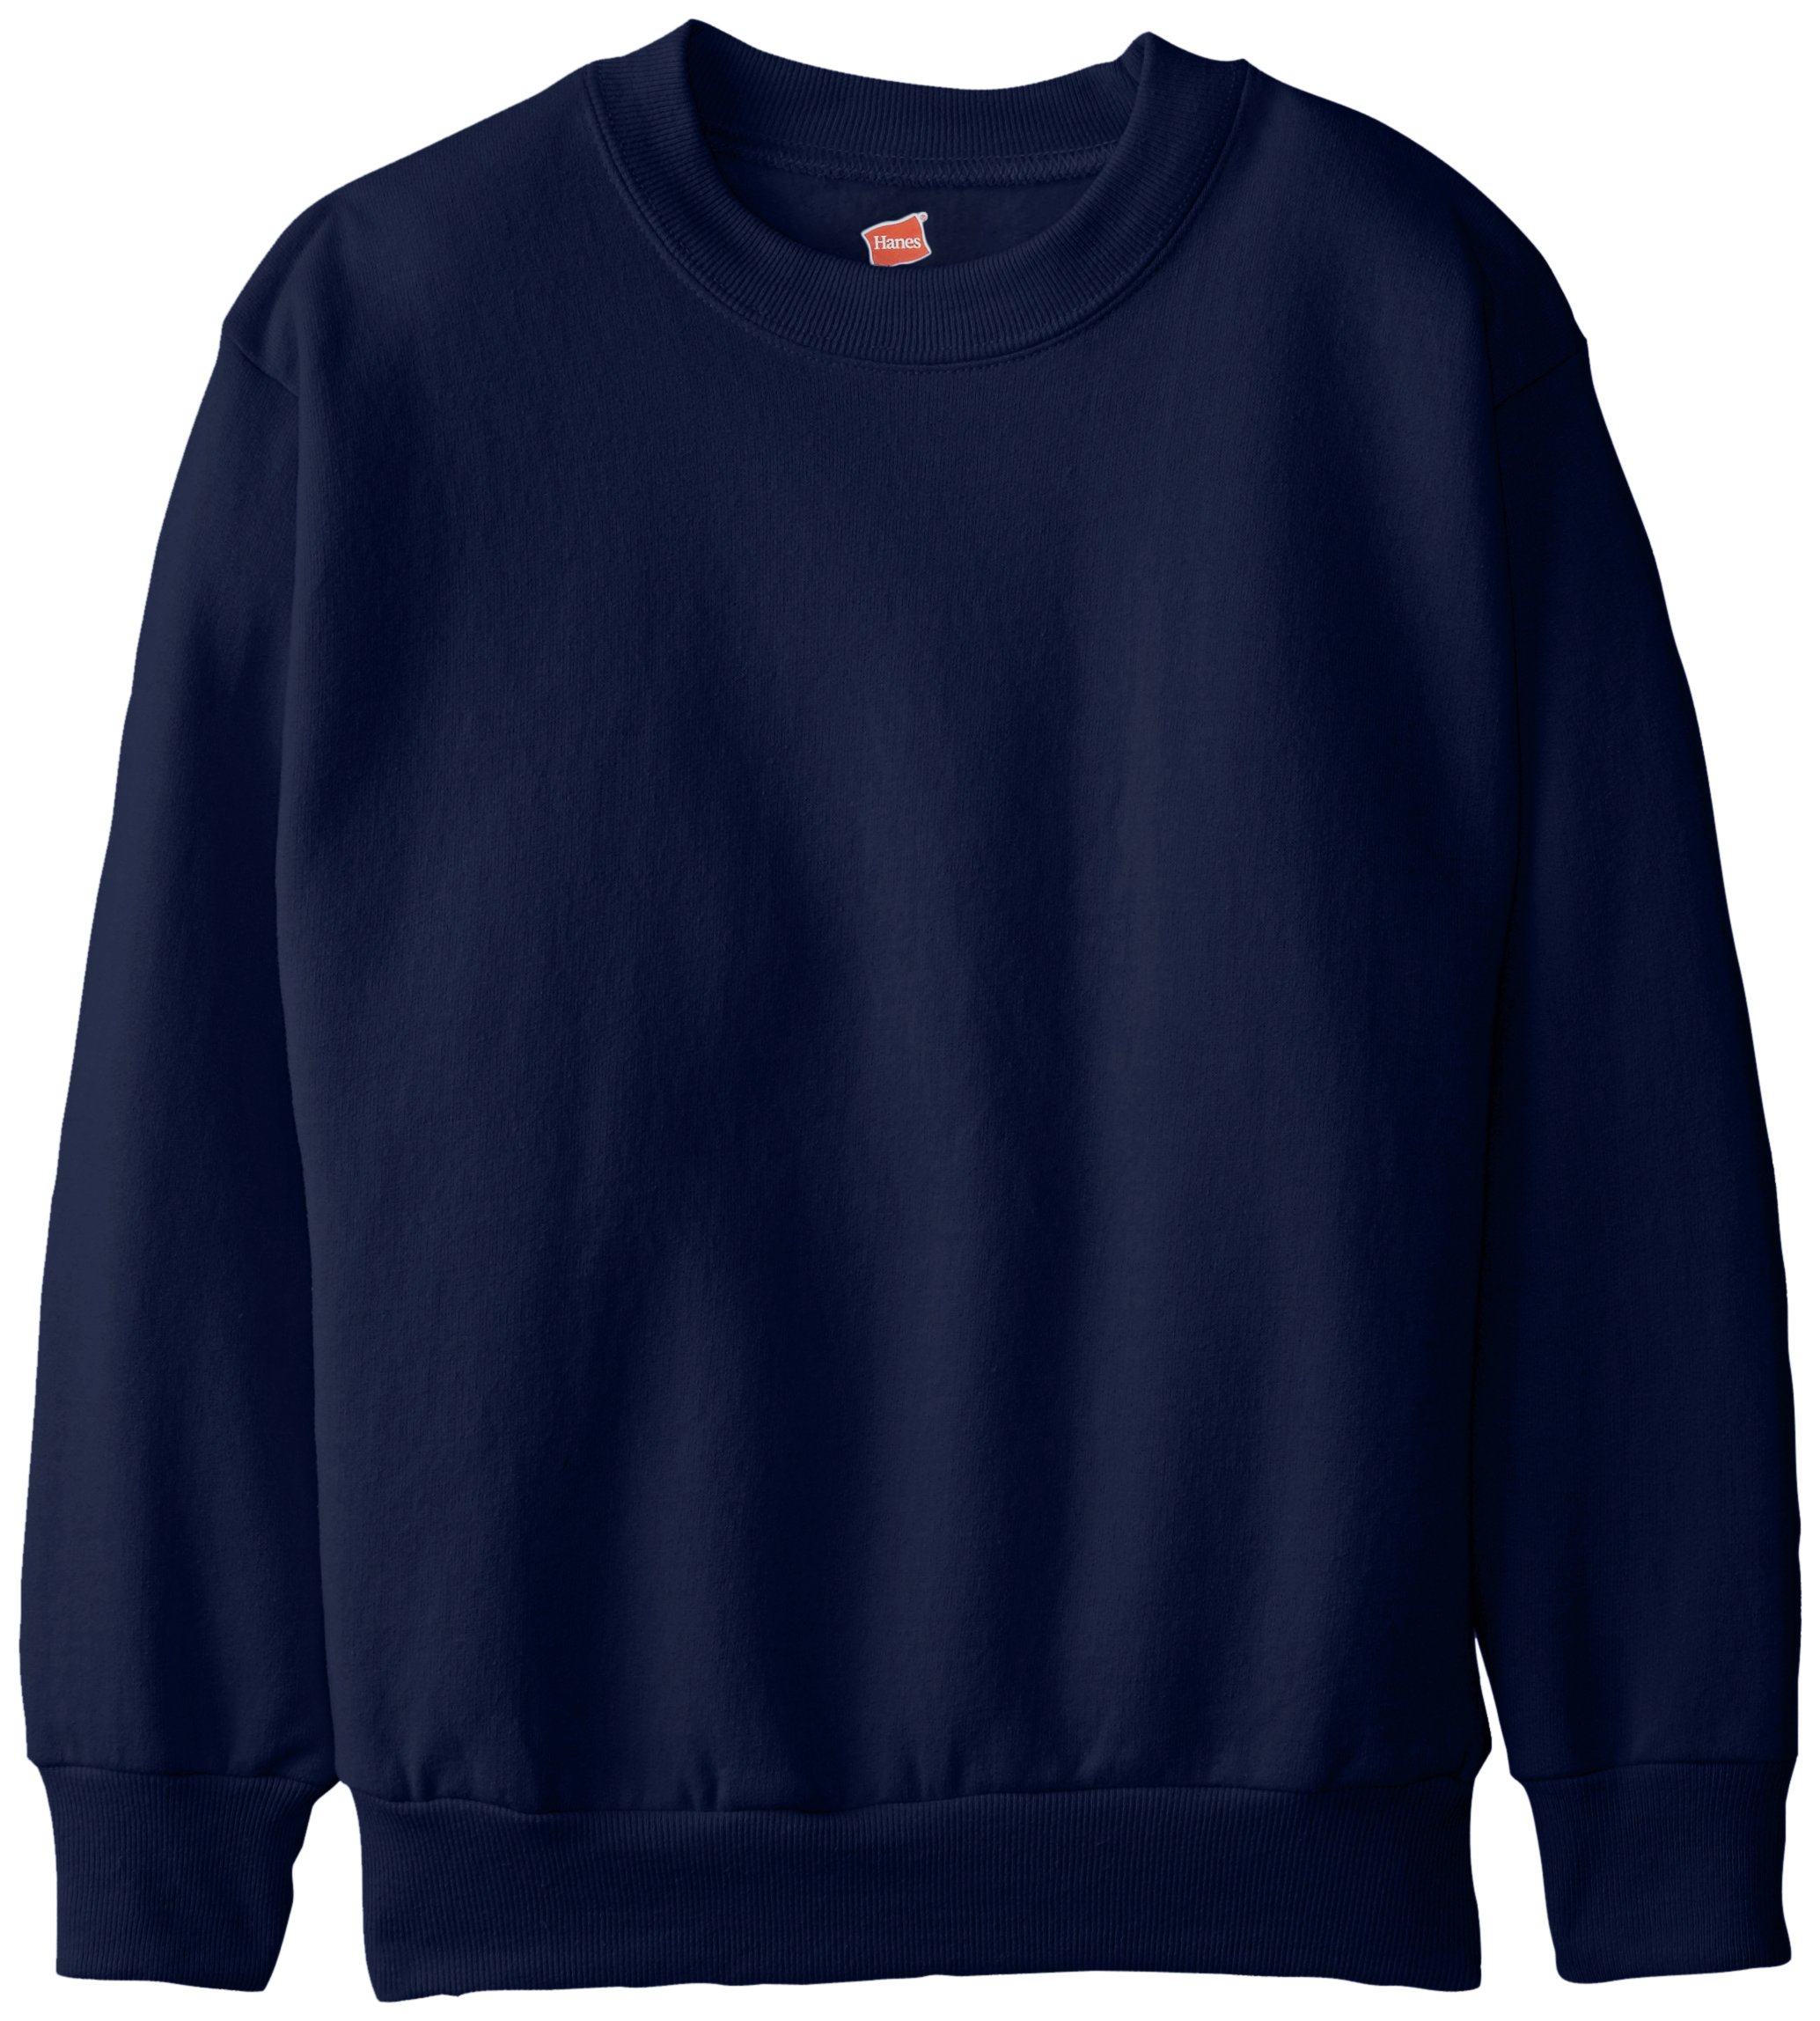 Hanes Boys' EcoSmart Sweatshirt, Cotton Crewneck Pullover, Kids' Fleece Sweatshirt